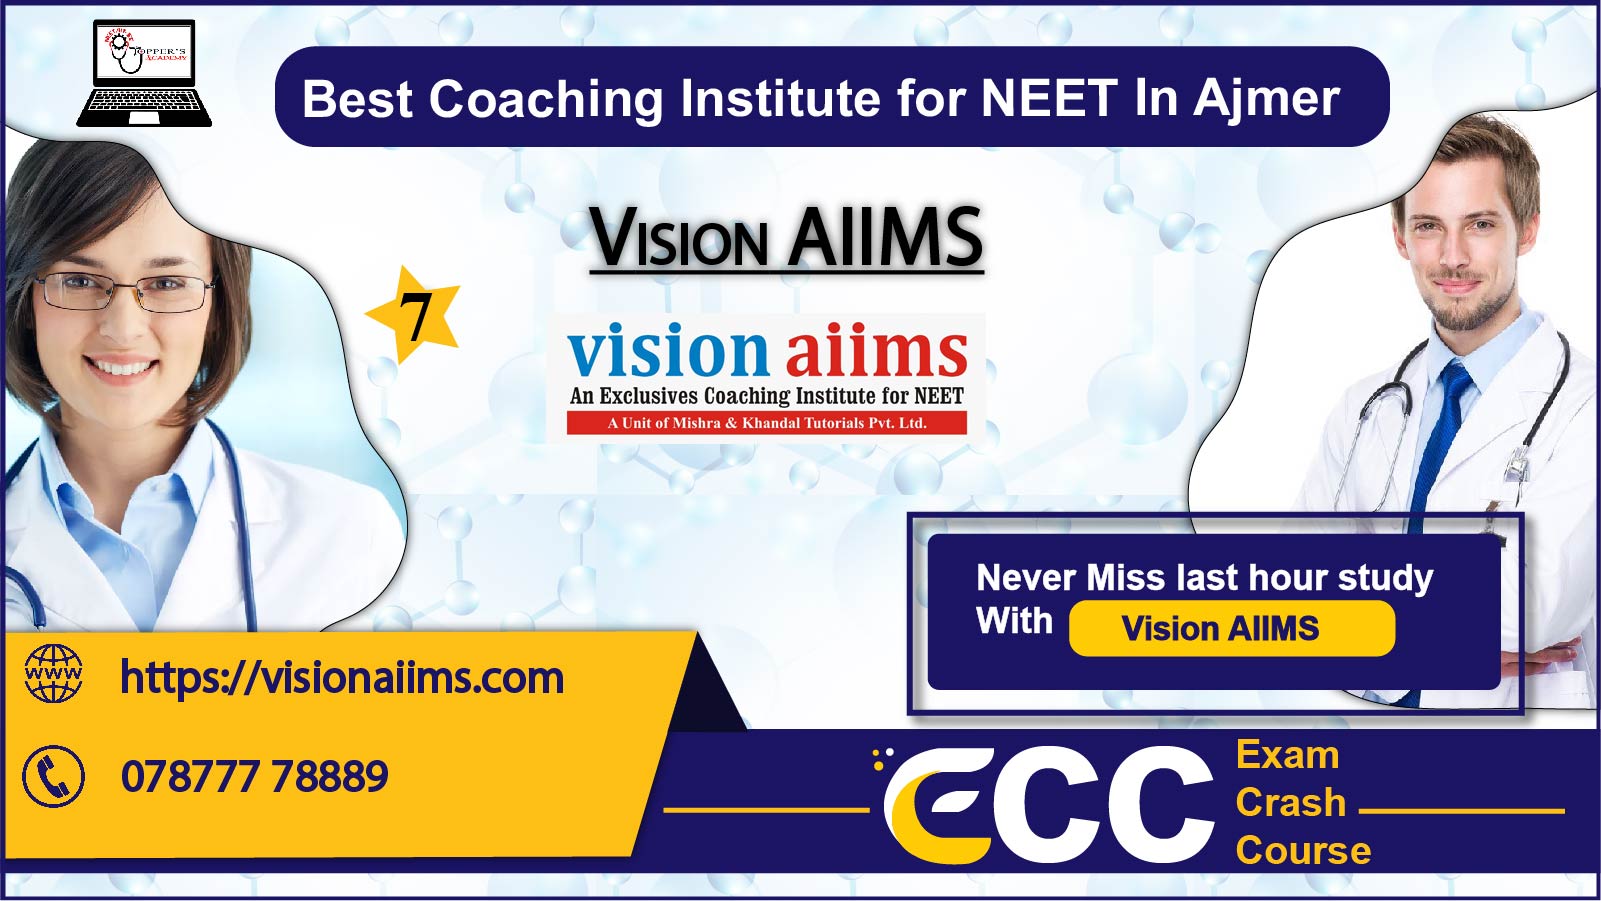 Vision AIIMS NEET Coaching in Ajmer